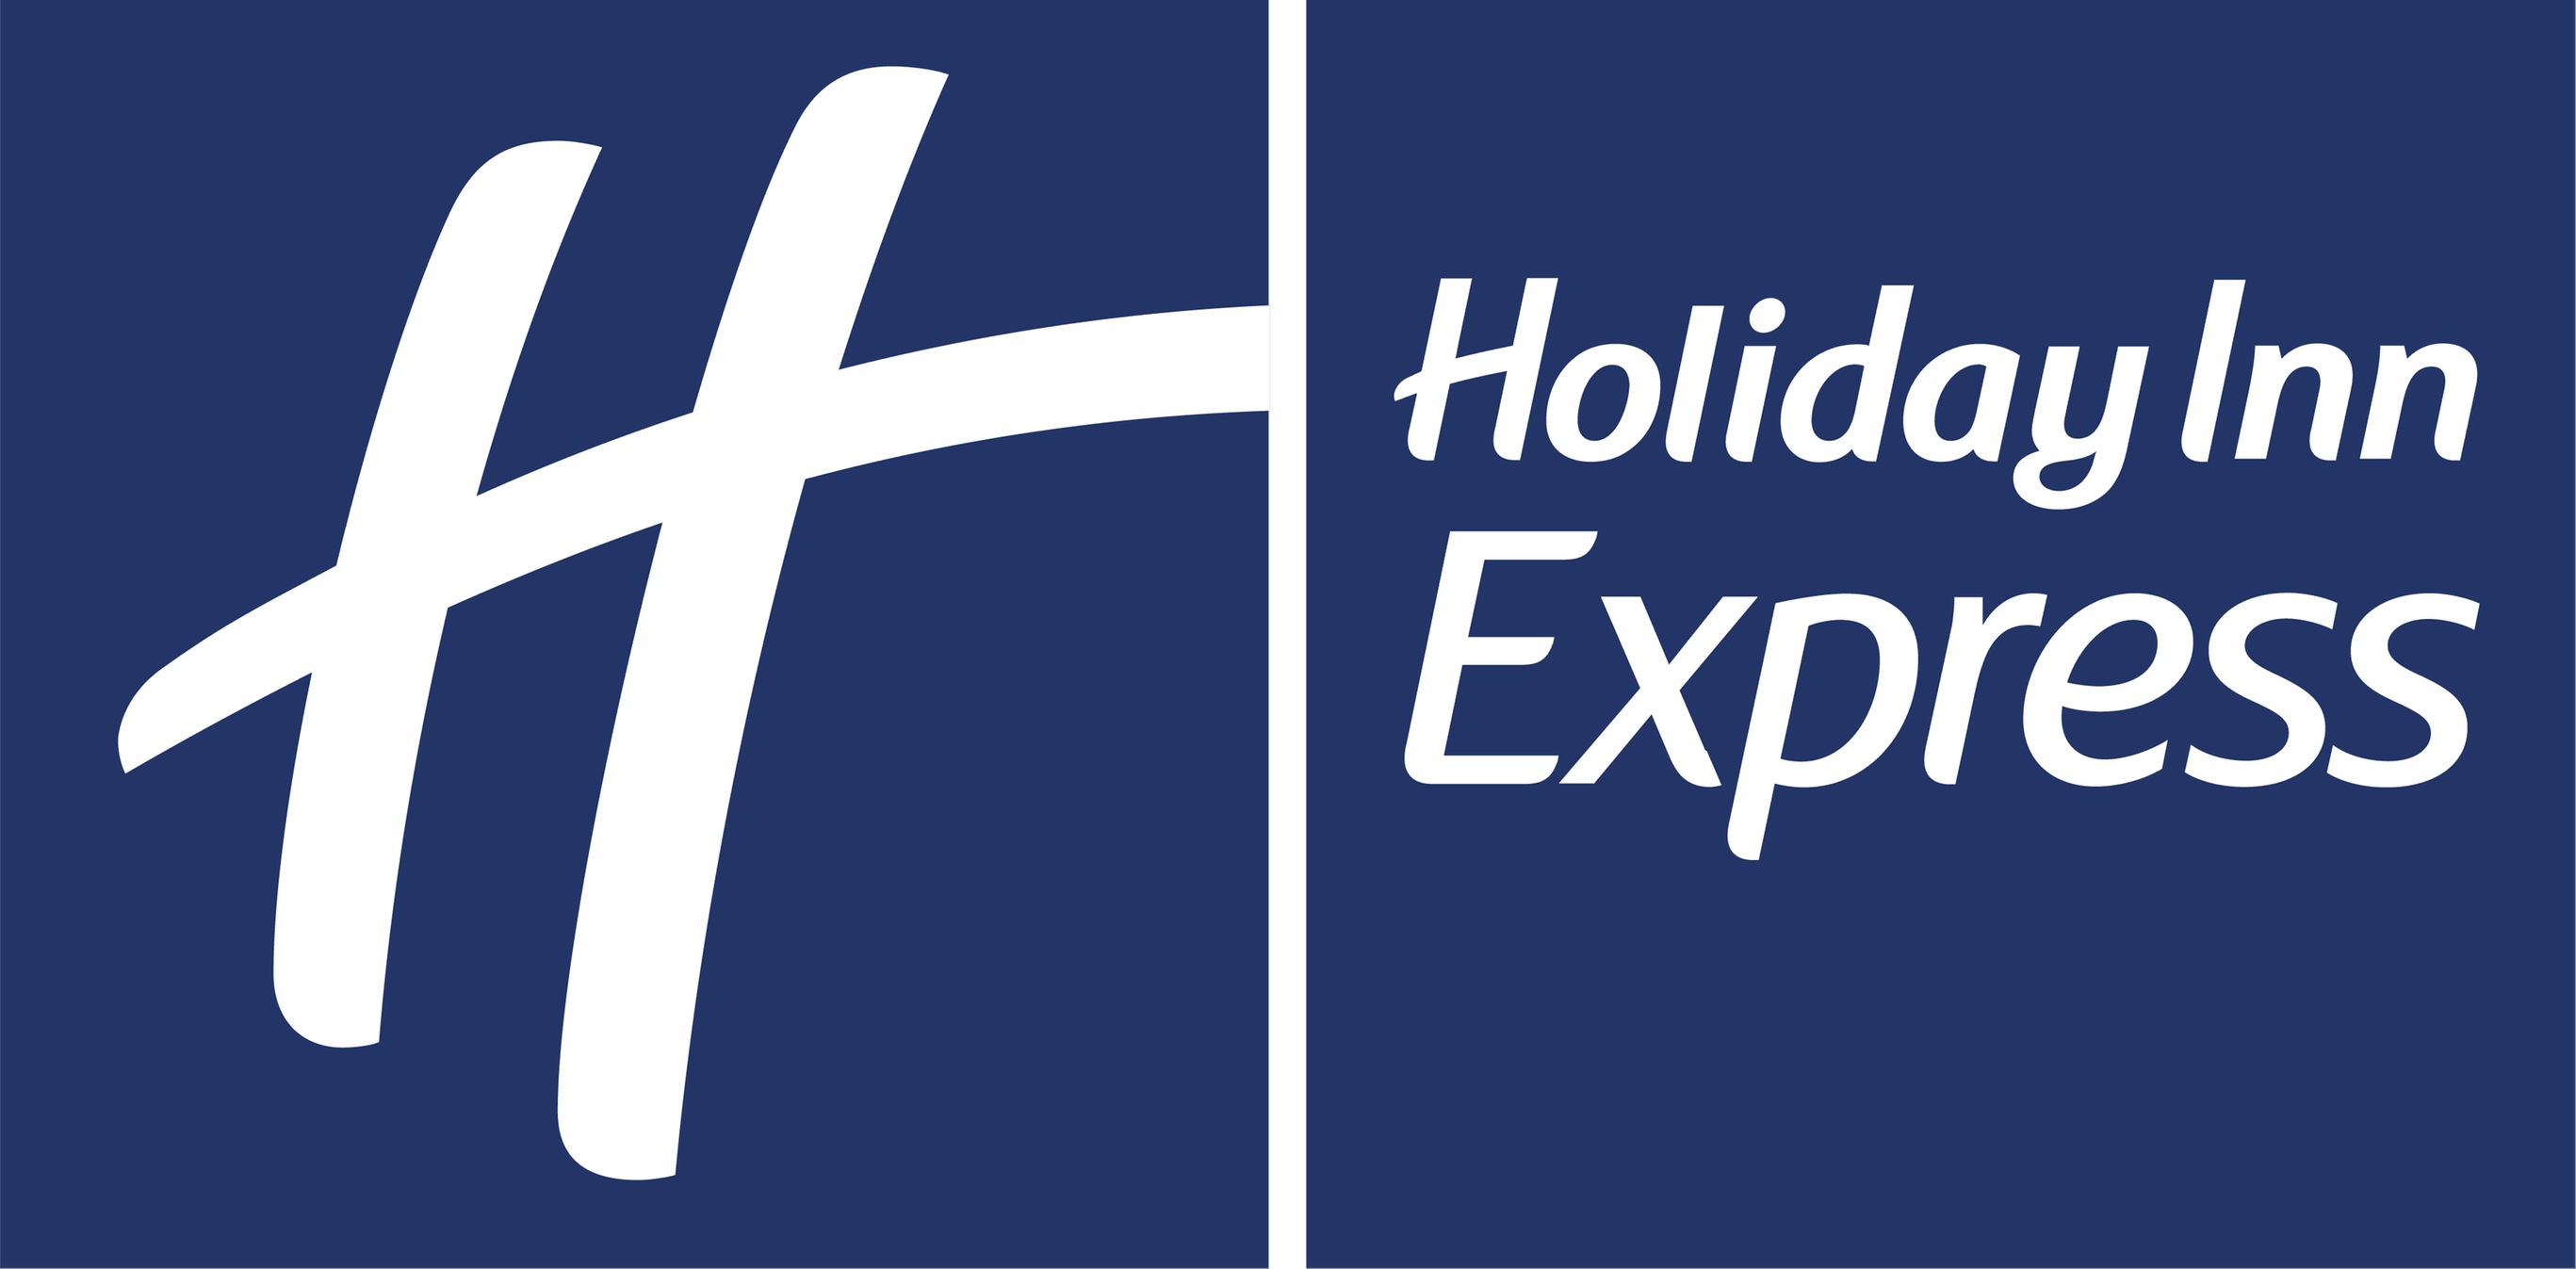 Holiday Inn Express Sponsor